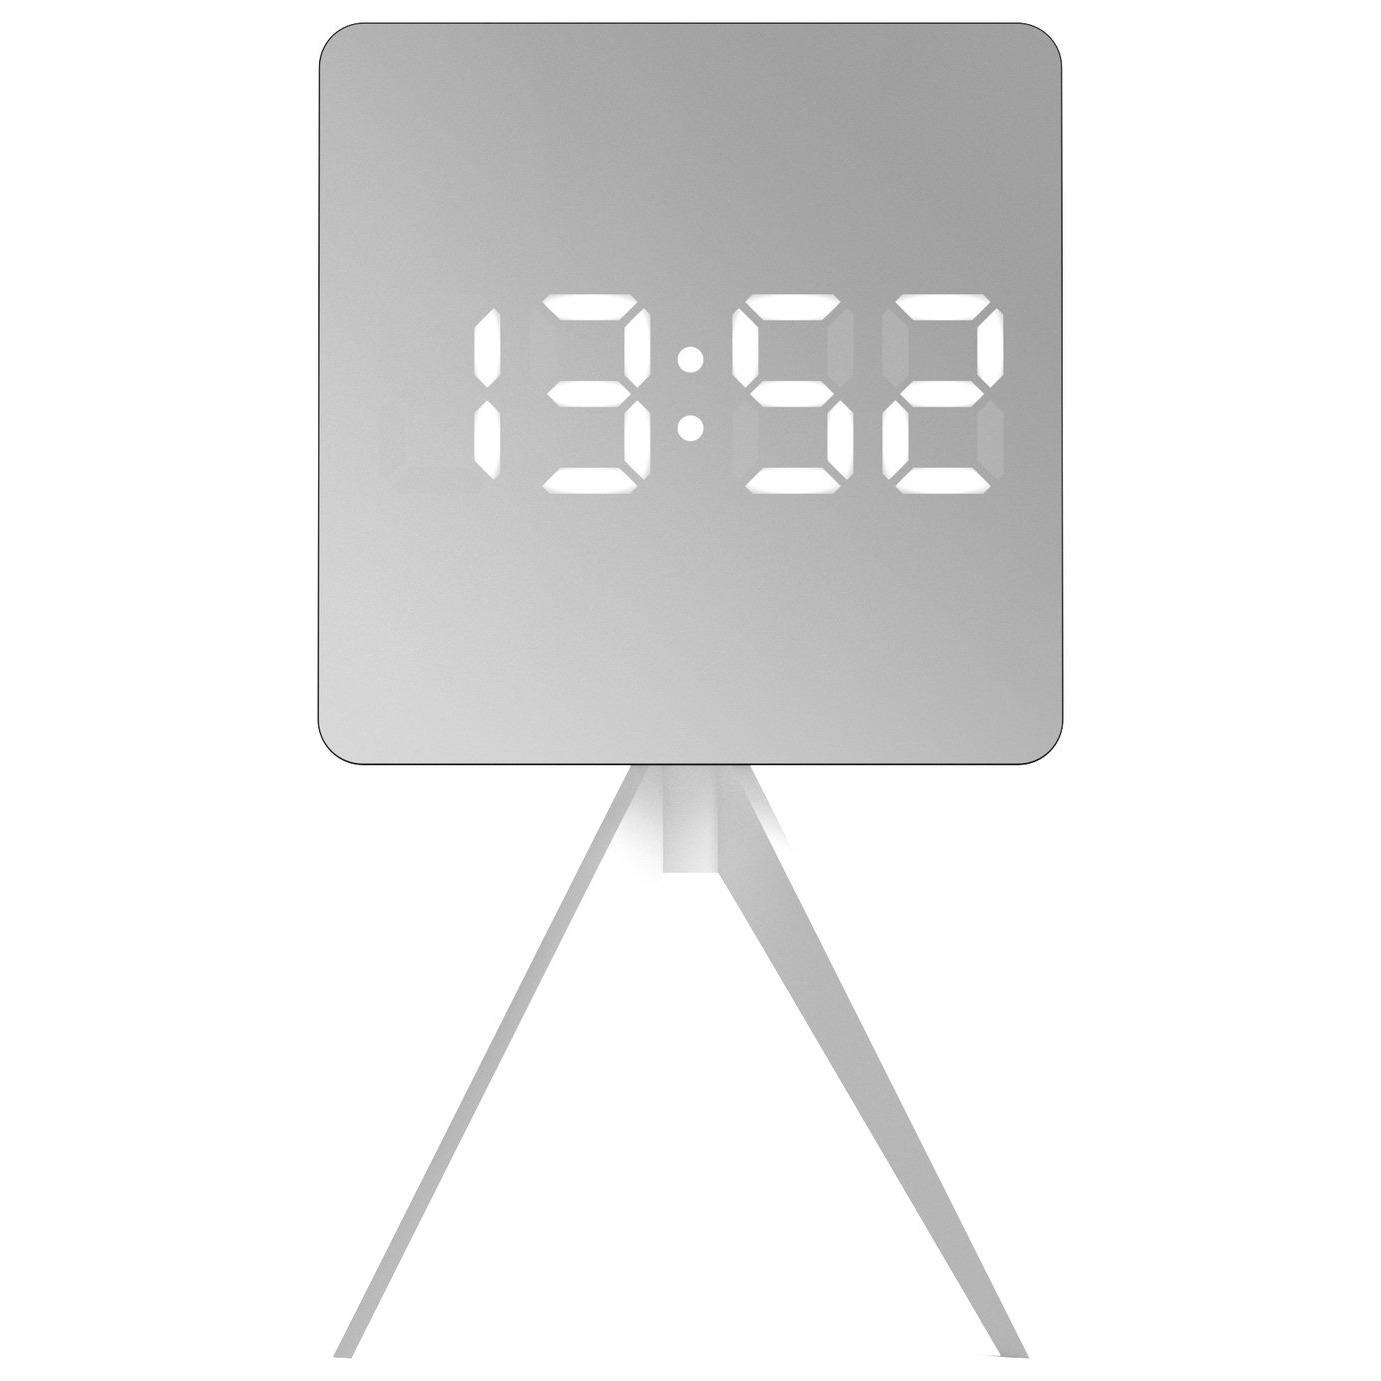 Space Hotel Droid LED Digital Alarm Clock - Silver